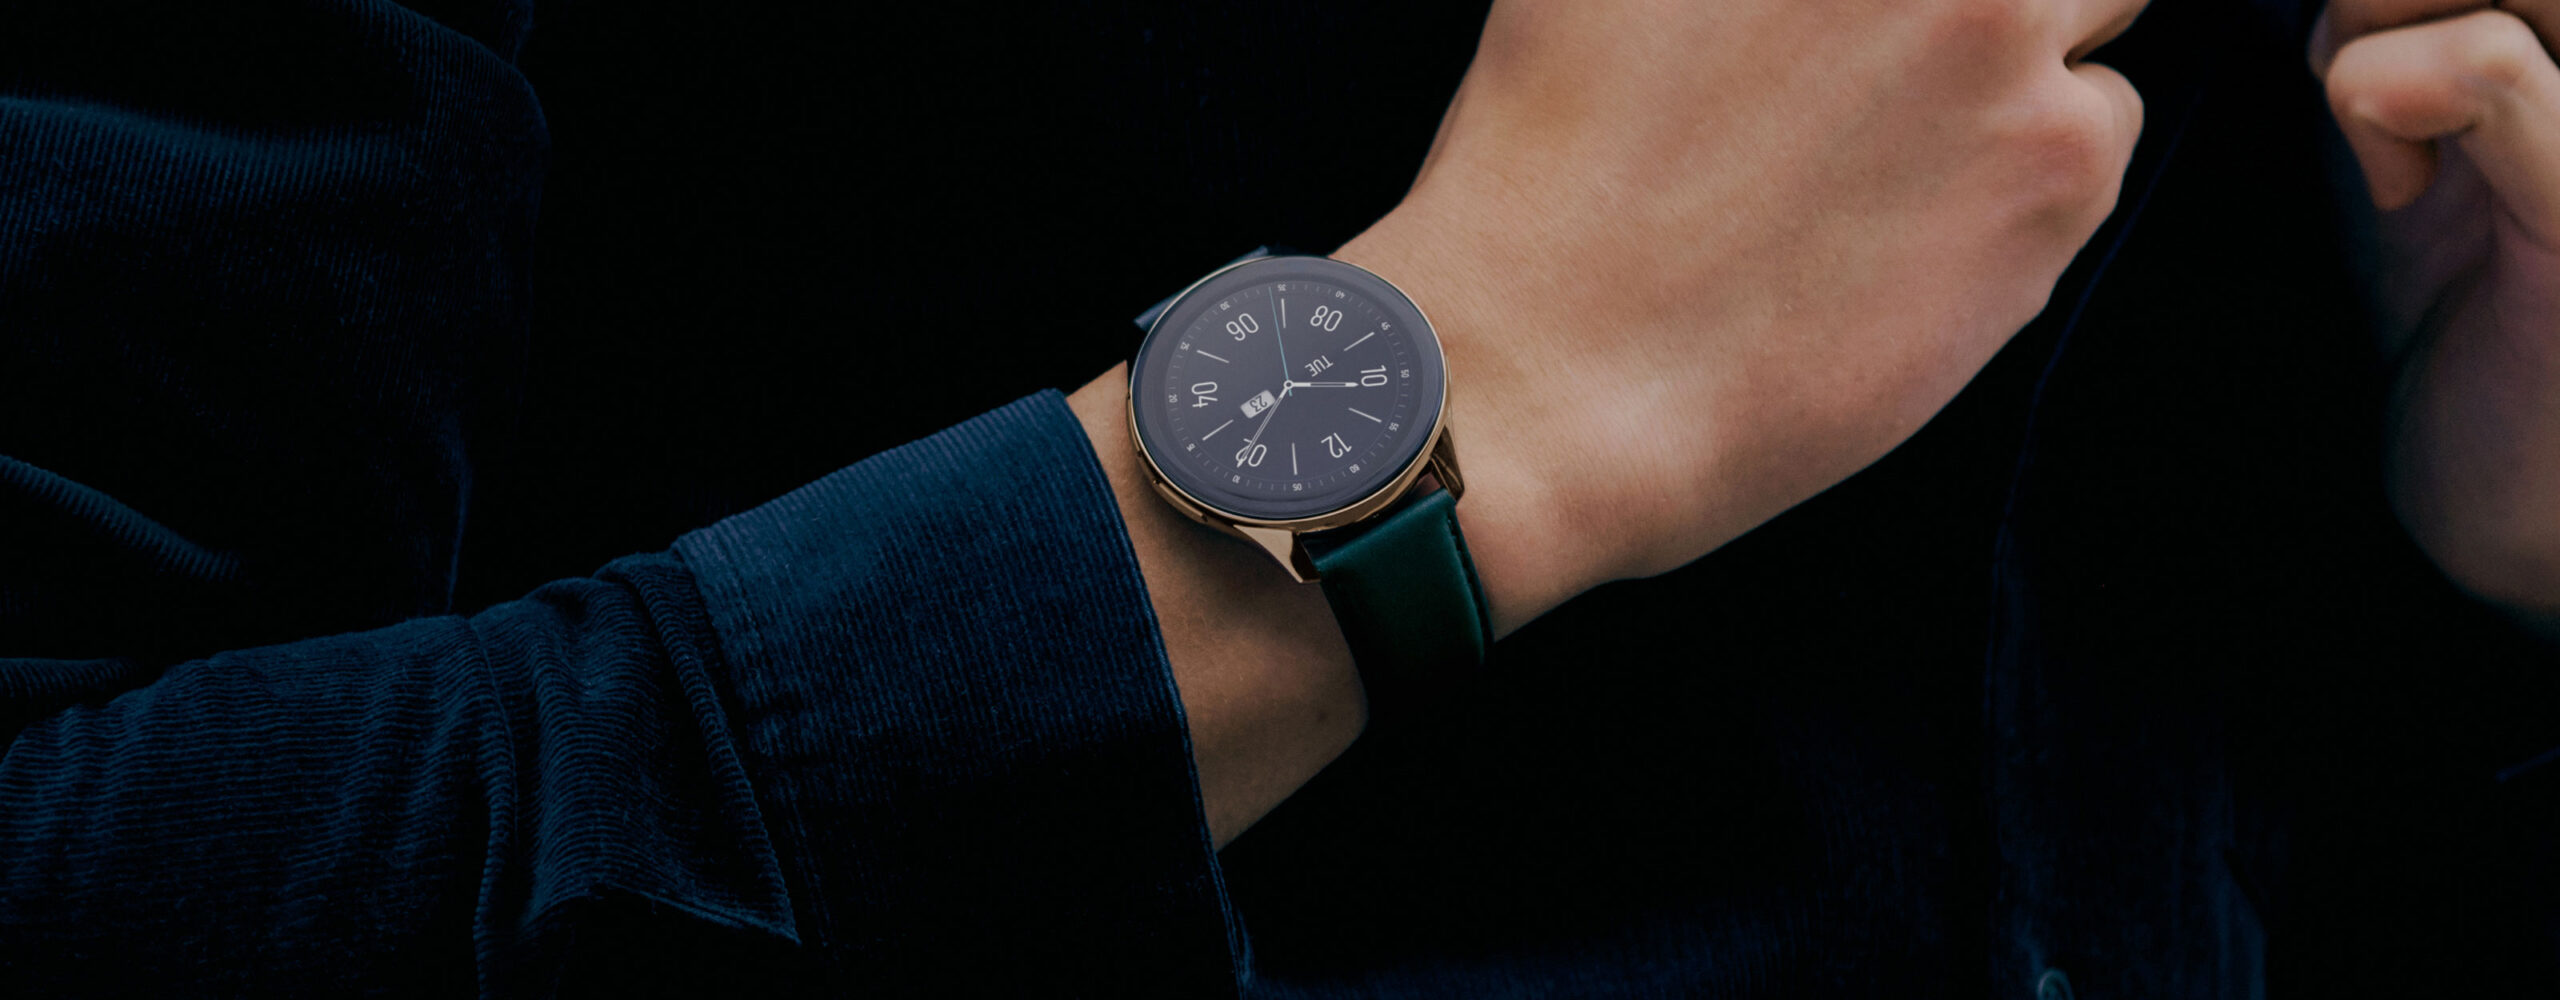 Oneplus Watch Cobalt Limited Edition